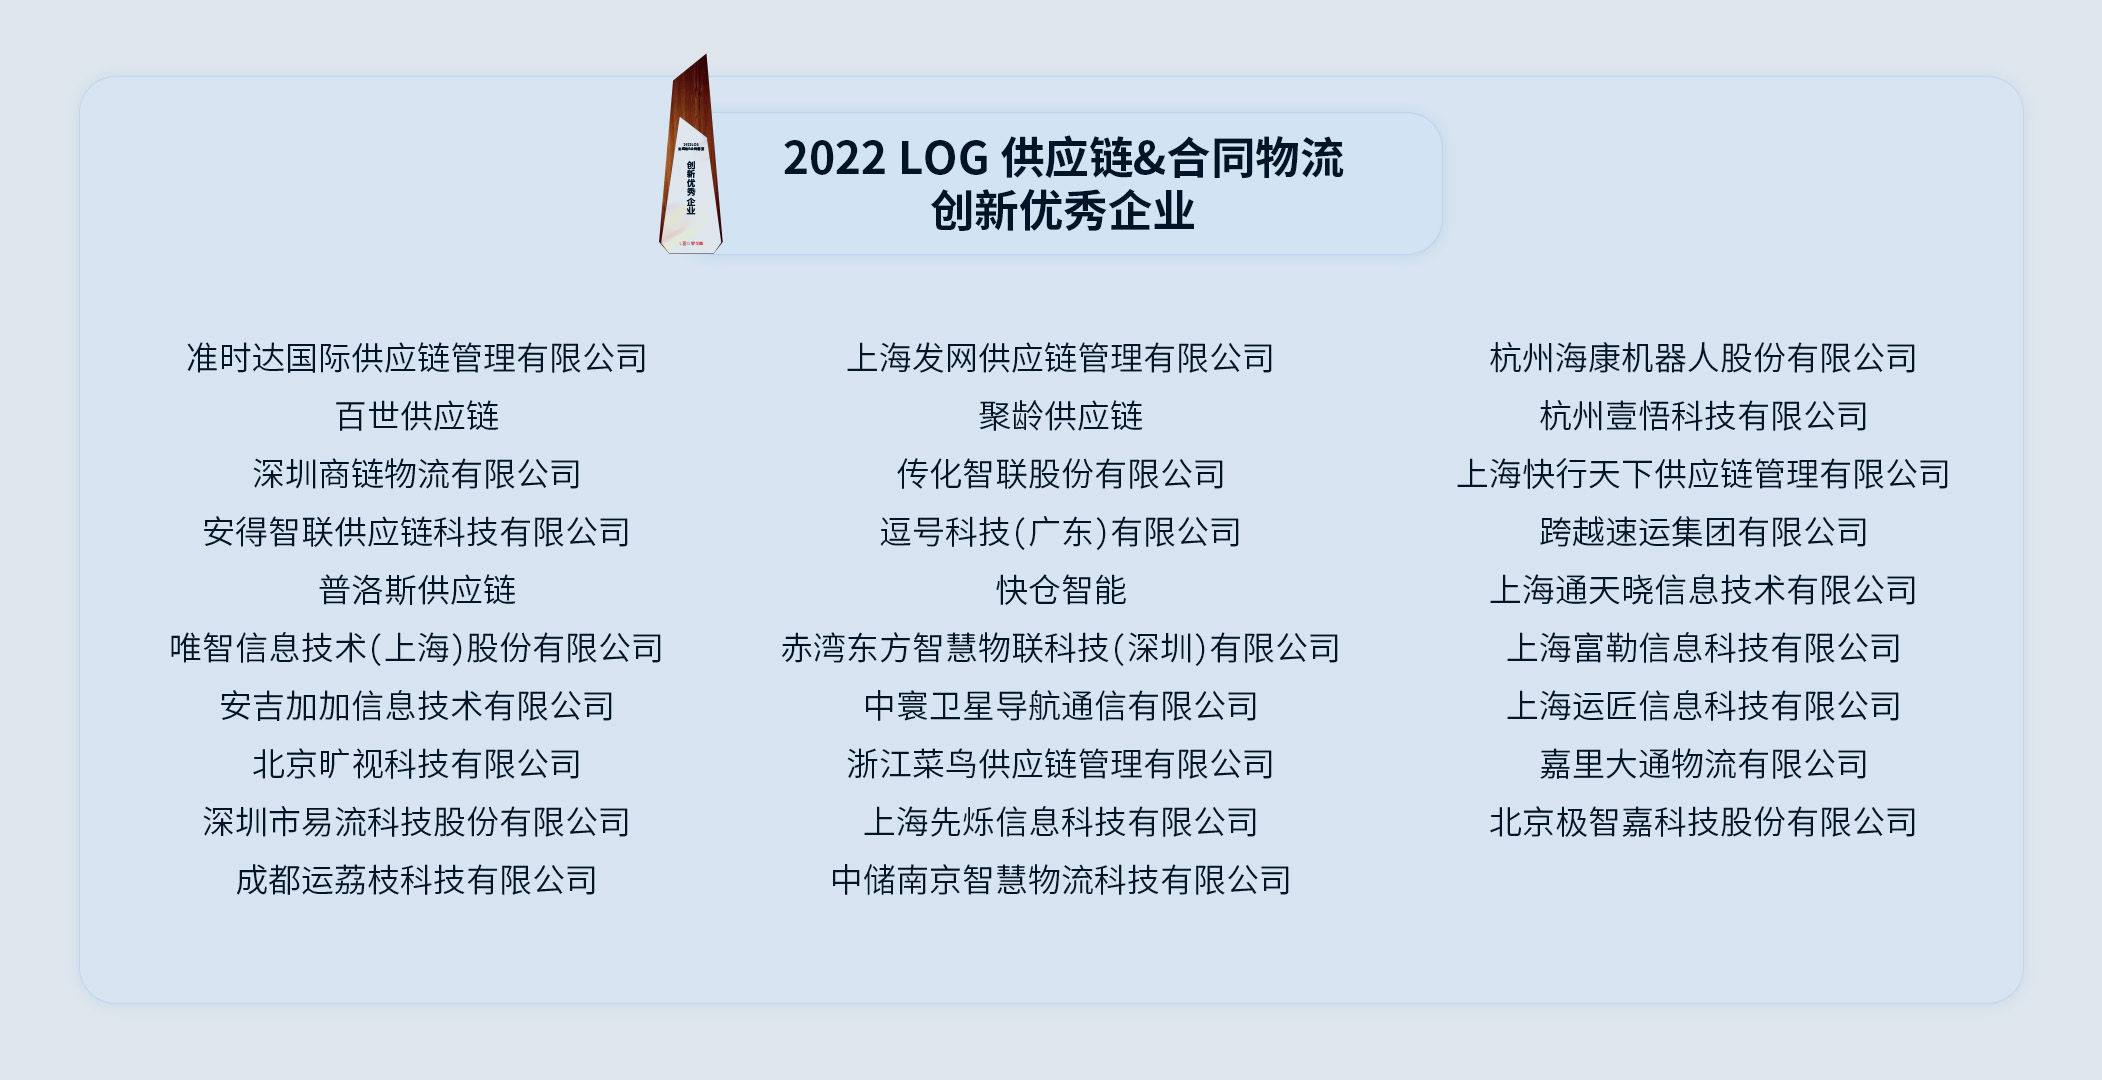 2022 LOG 供应链&合同物流创新优秀企业名单发布！